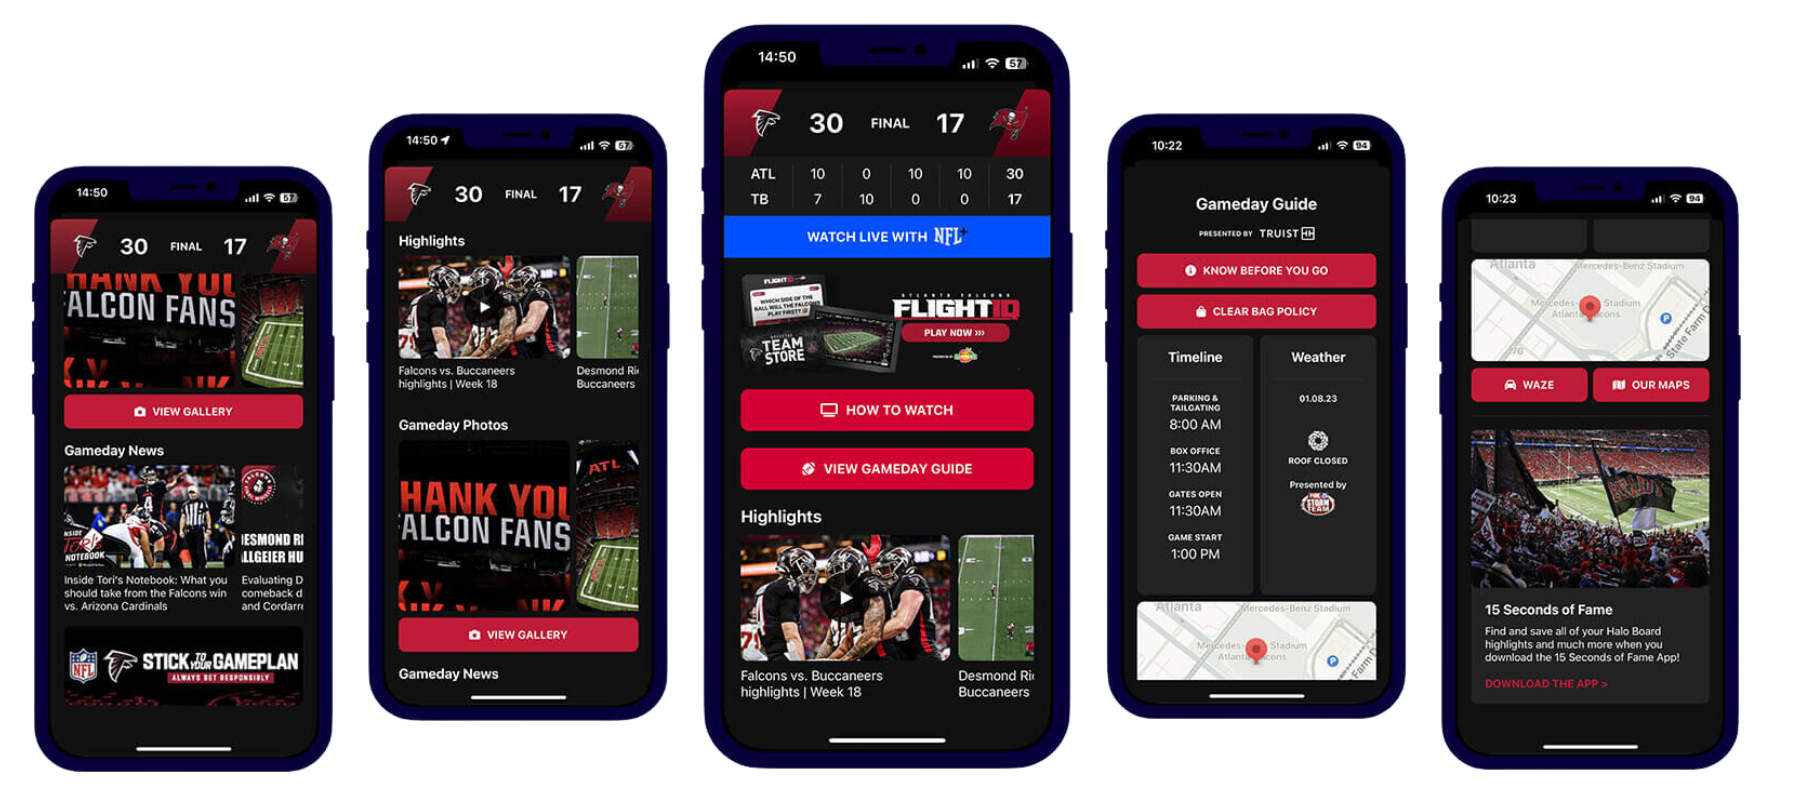 The Atlanta Falcons app, developed by Rover